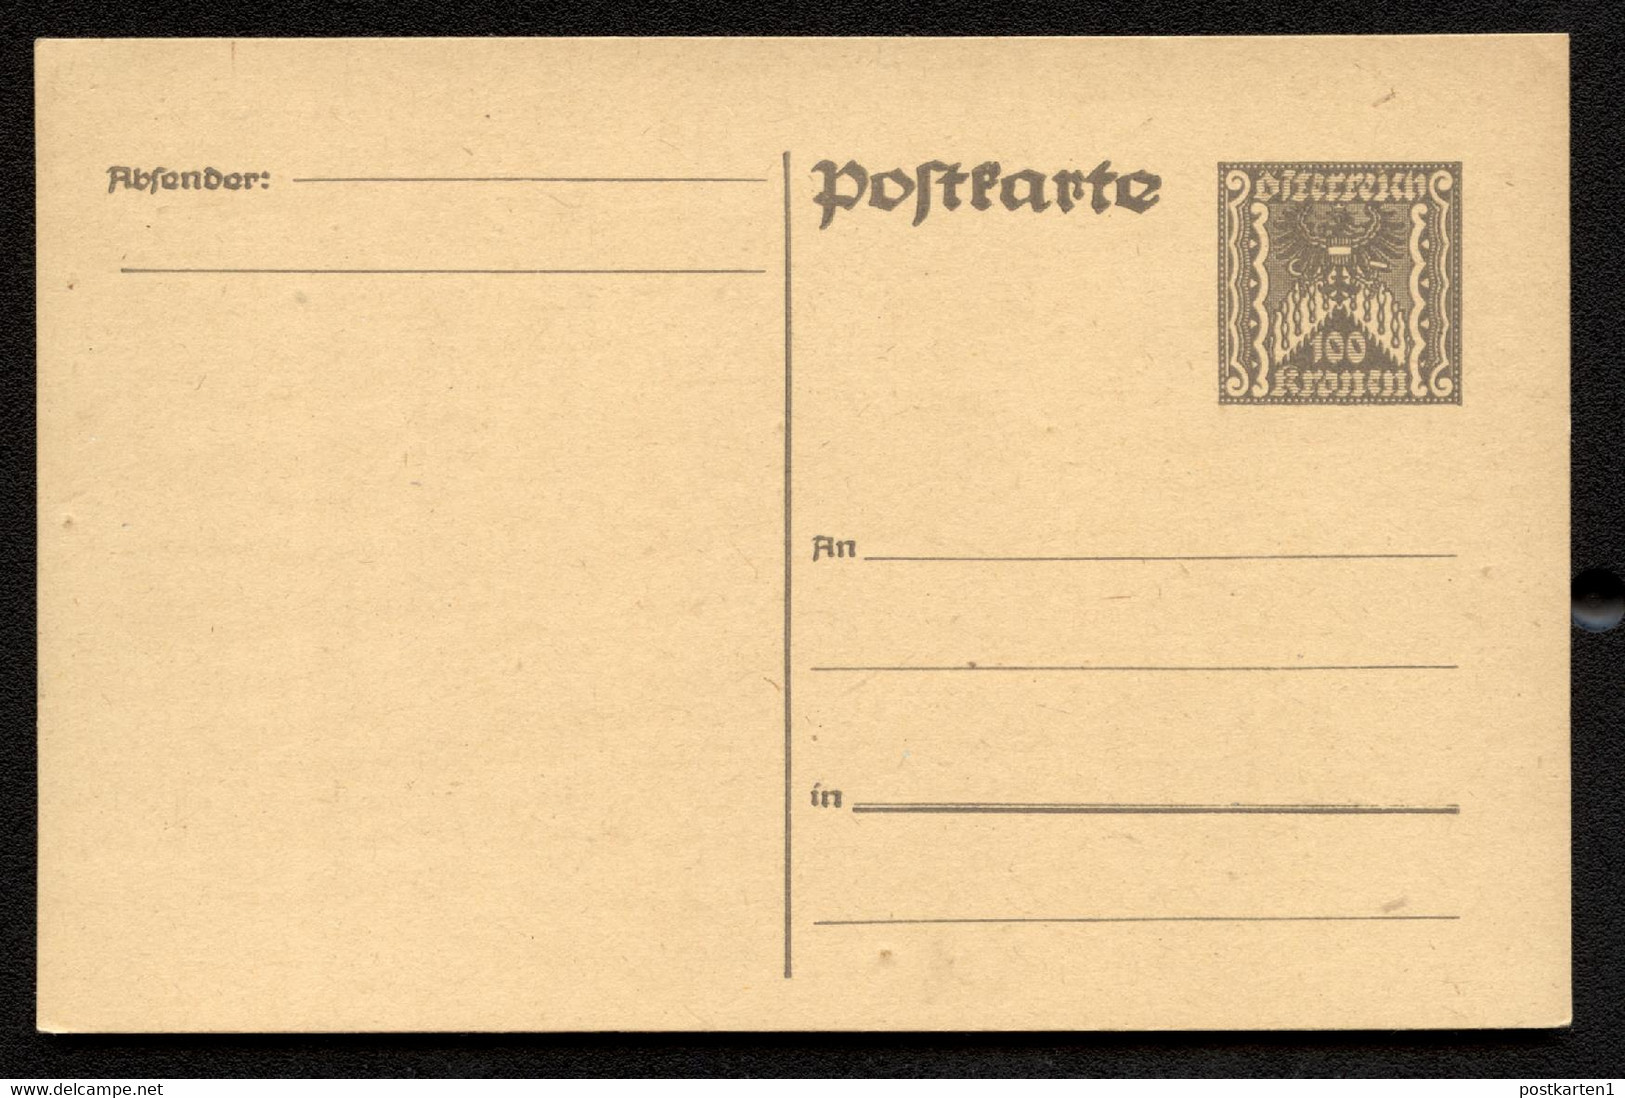 Postkarte P257 Postfrisch Feinst 1922 Kat.20,00 € - Postcards